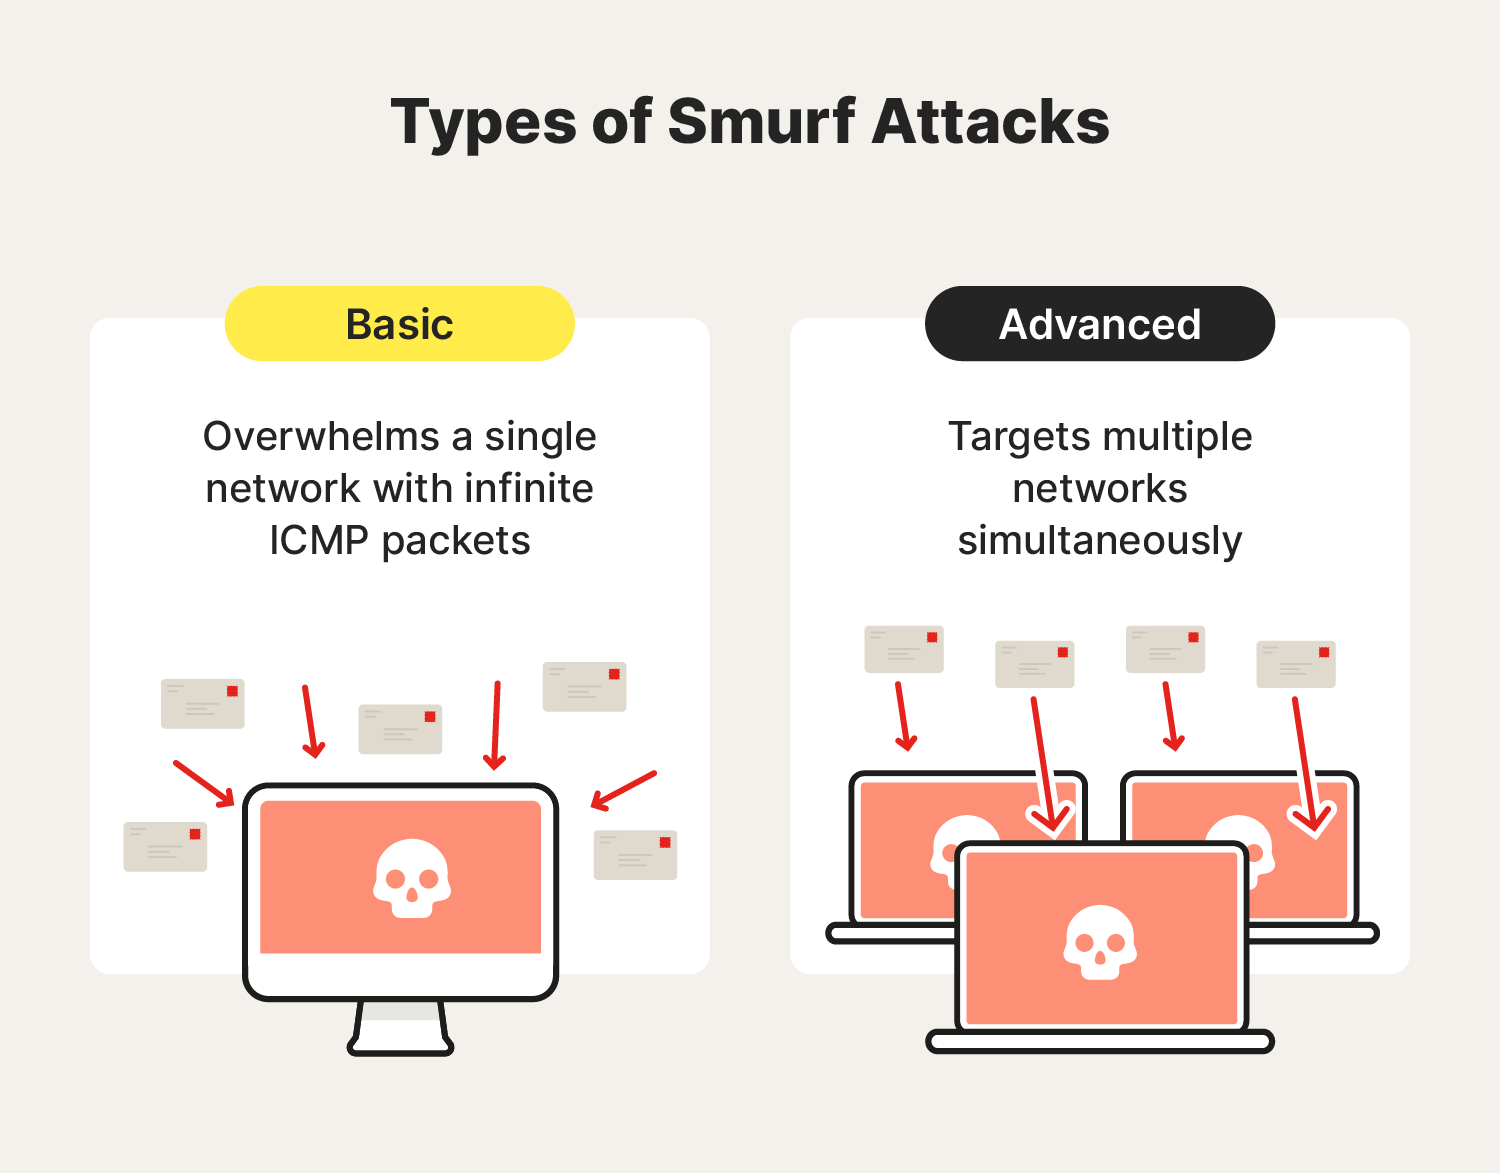 An image comparing basic vs. advanced smurf attacks.